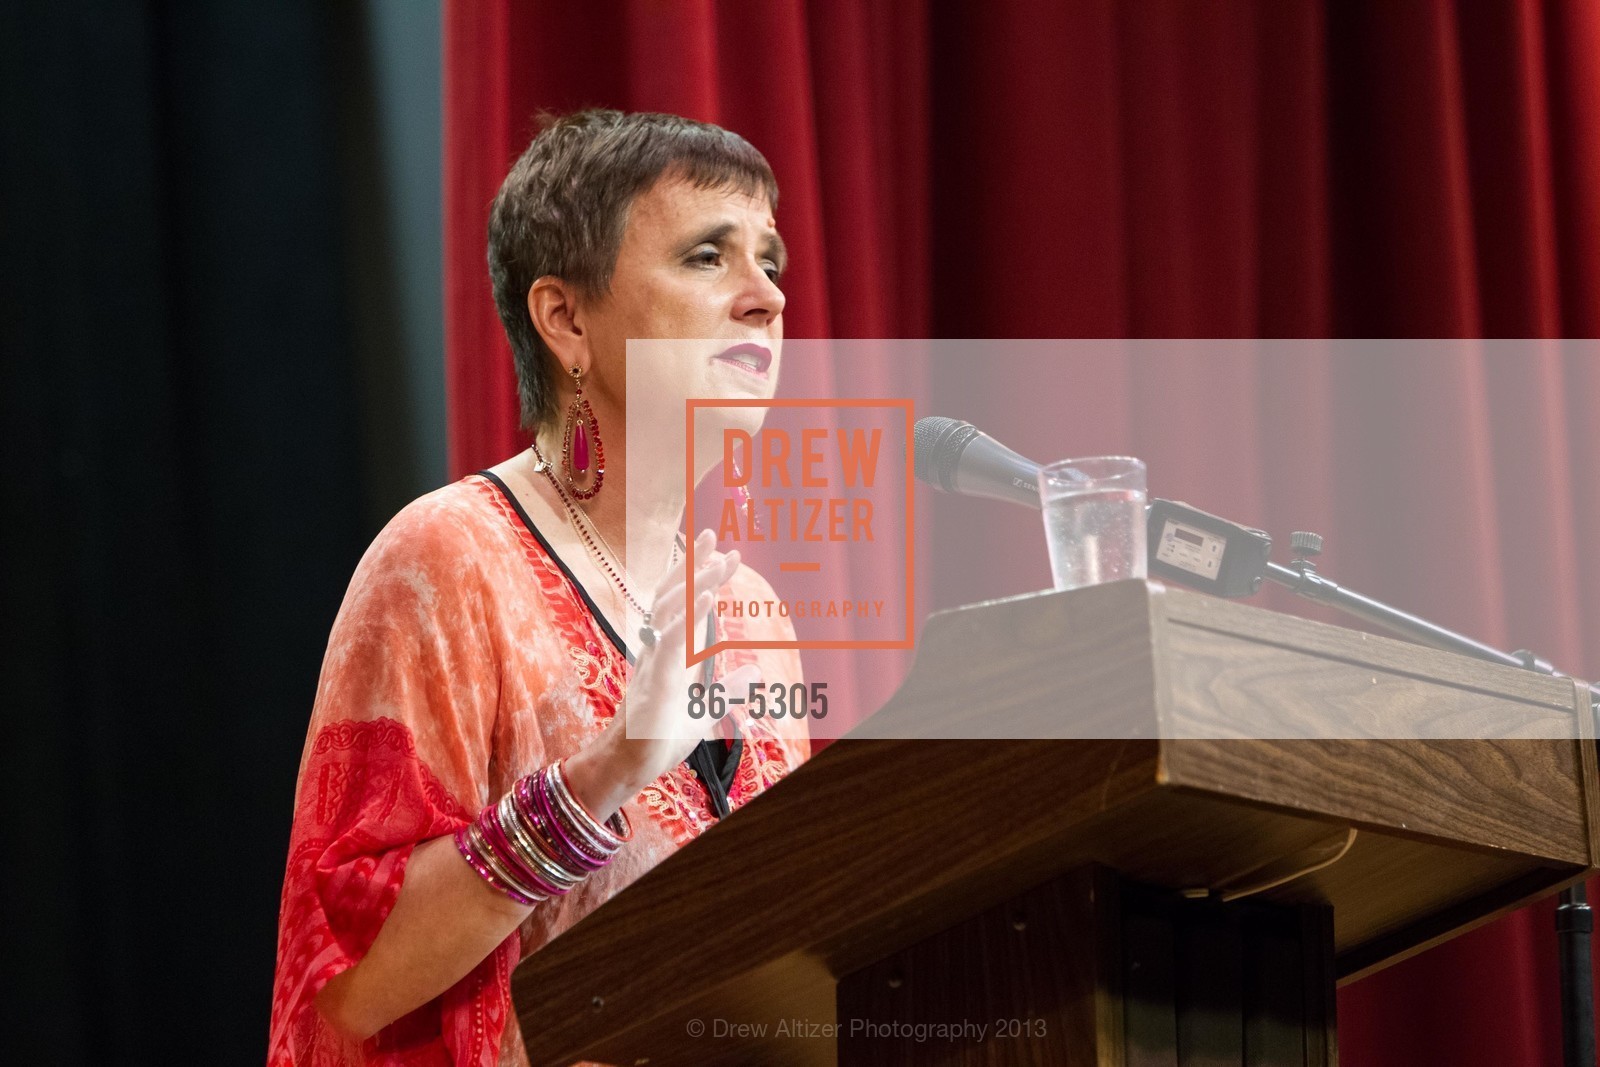 Eve Ensler, Photo #86-5305